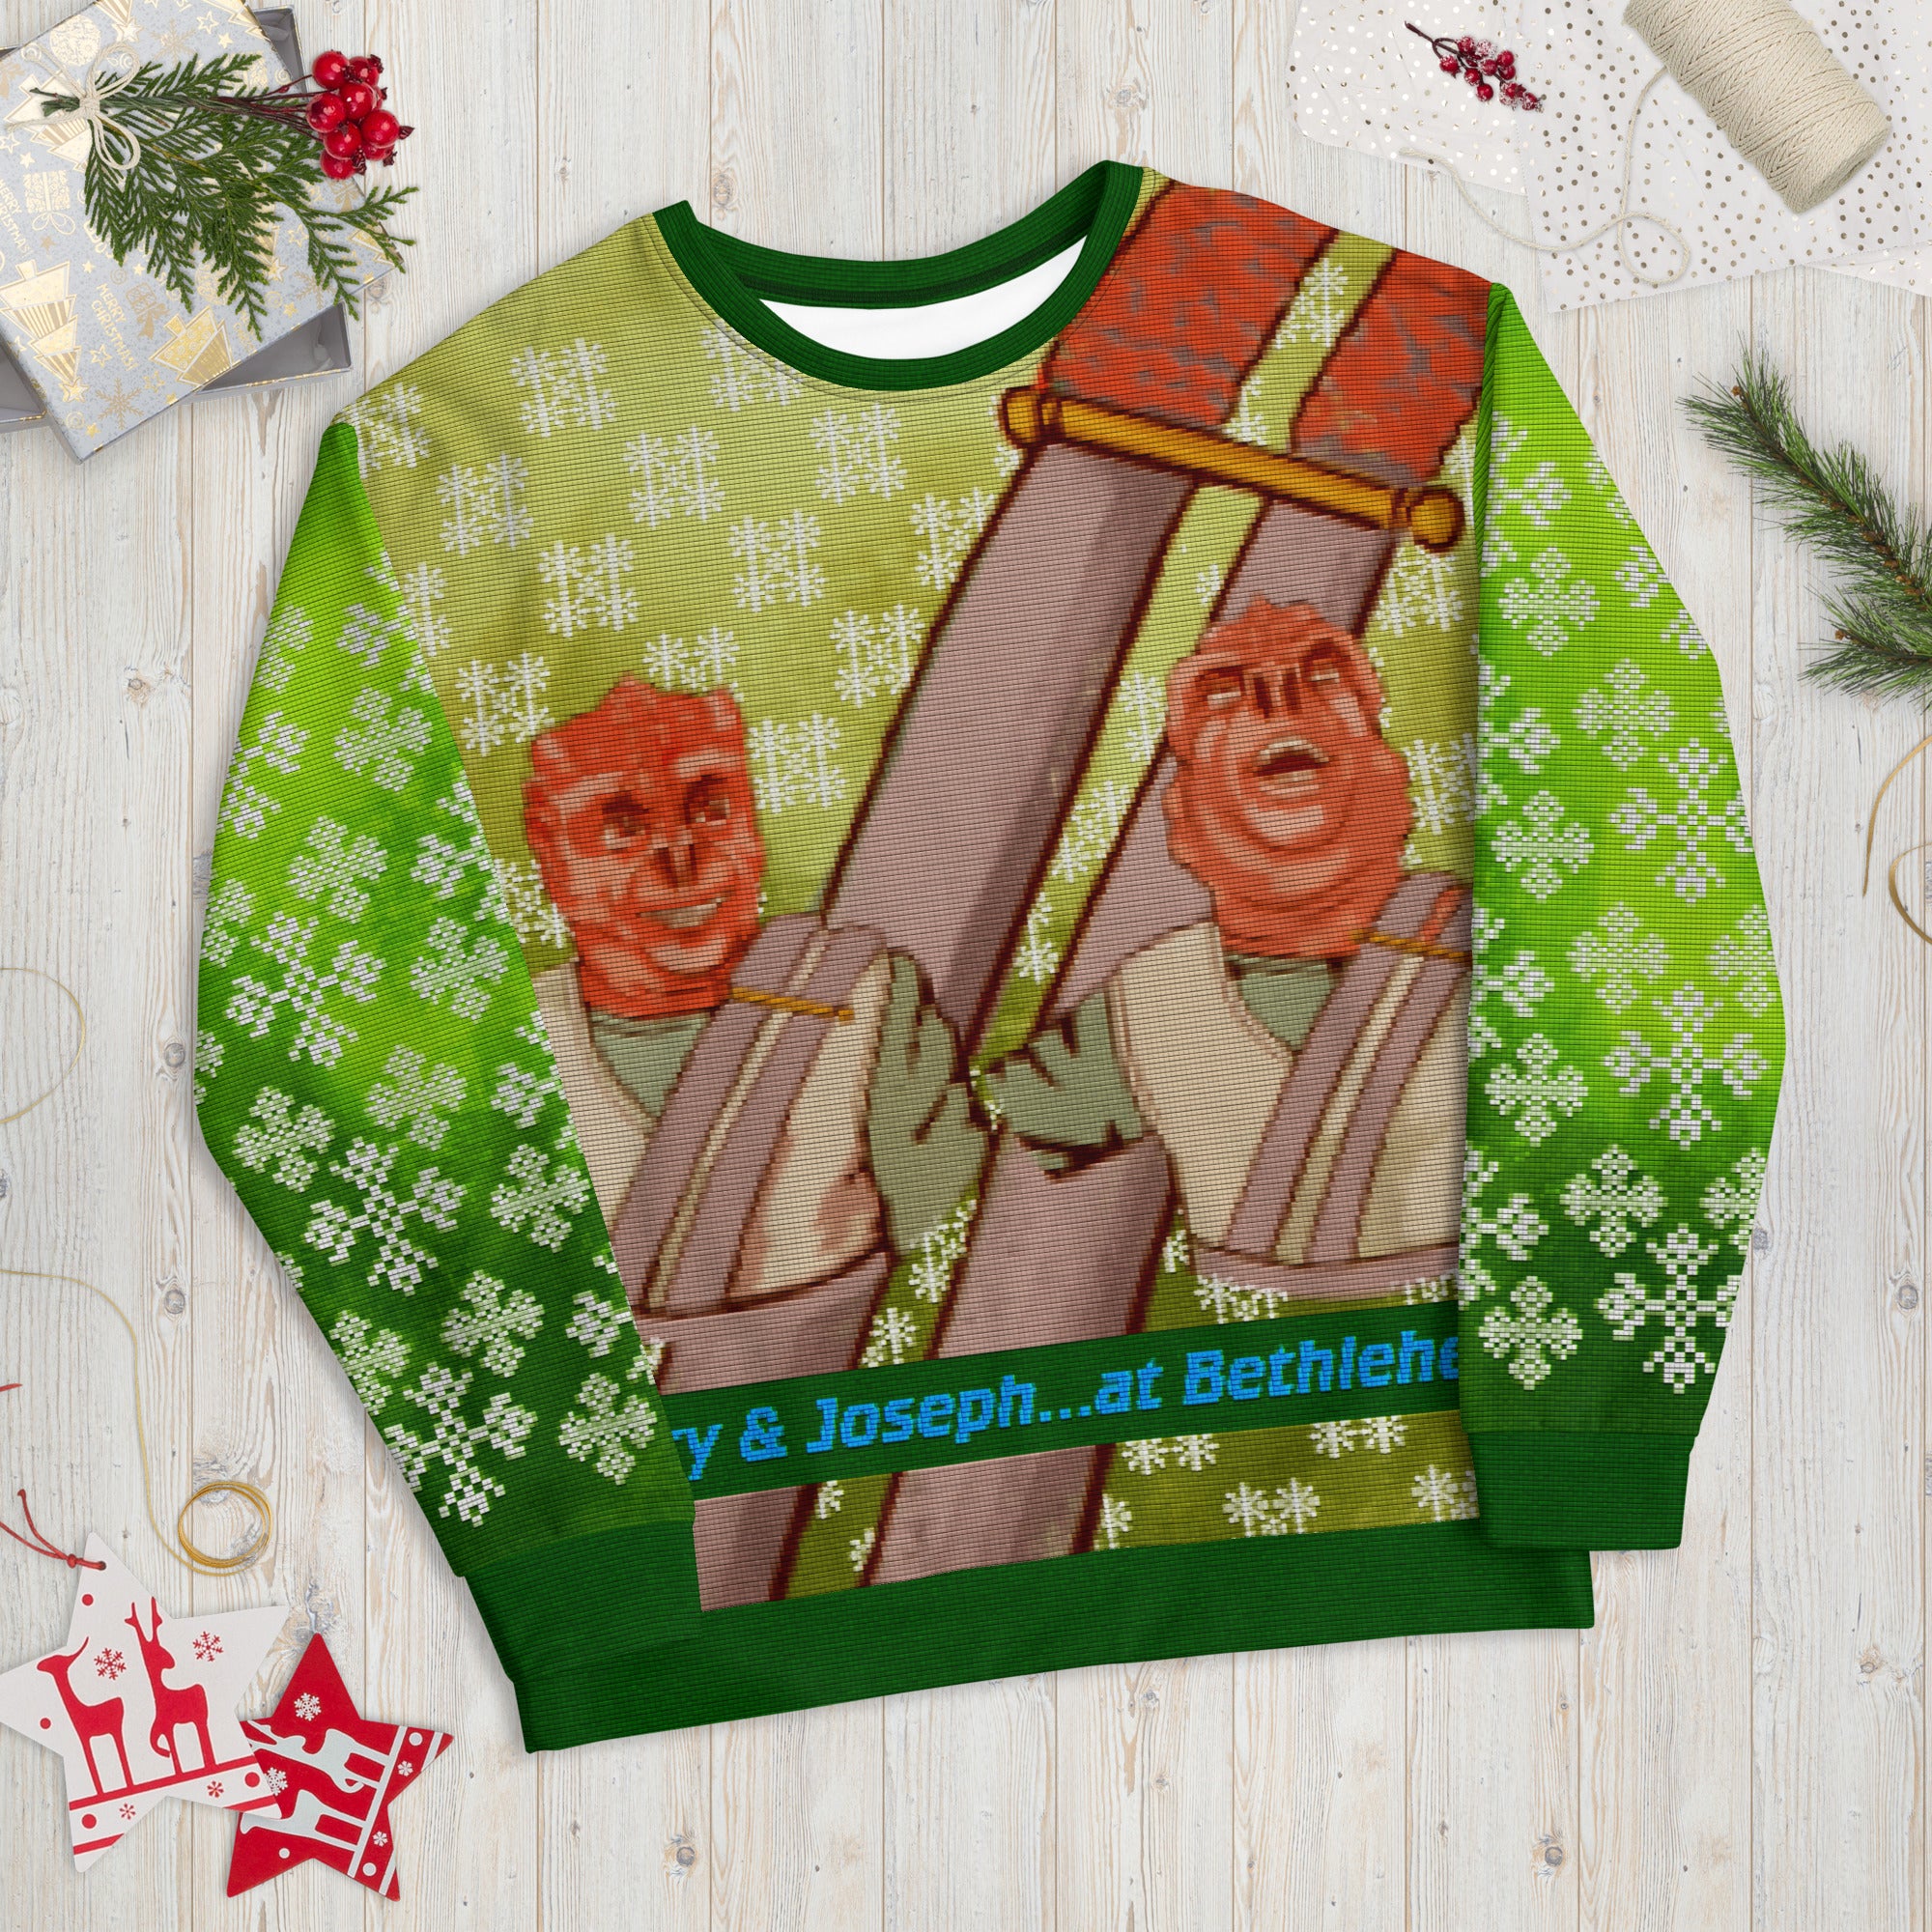 Mary & Joseph at Bethlehem - Faux Ugly Christmas Sweater (Printed Sweatshirt)